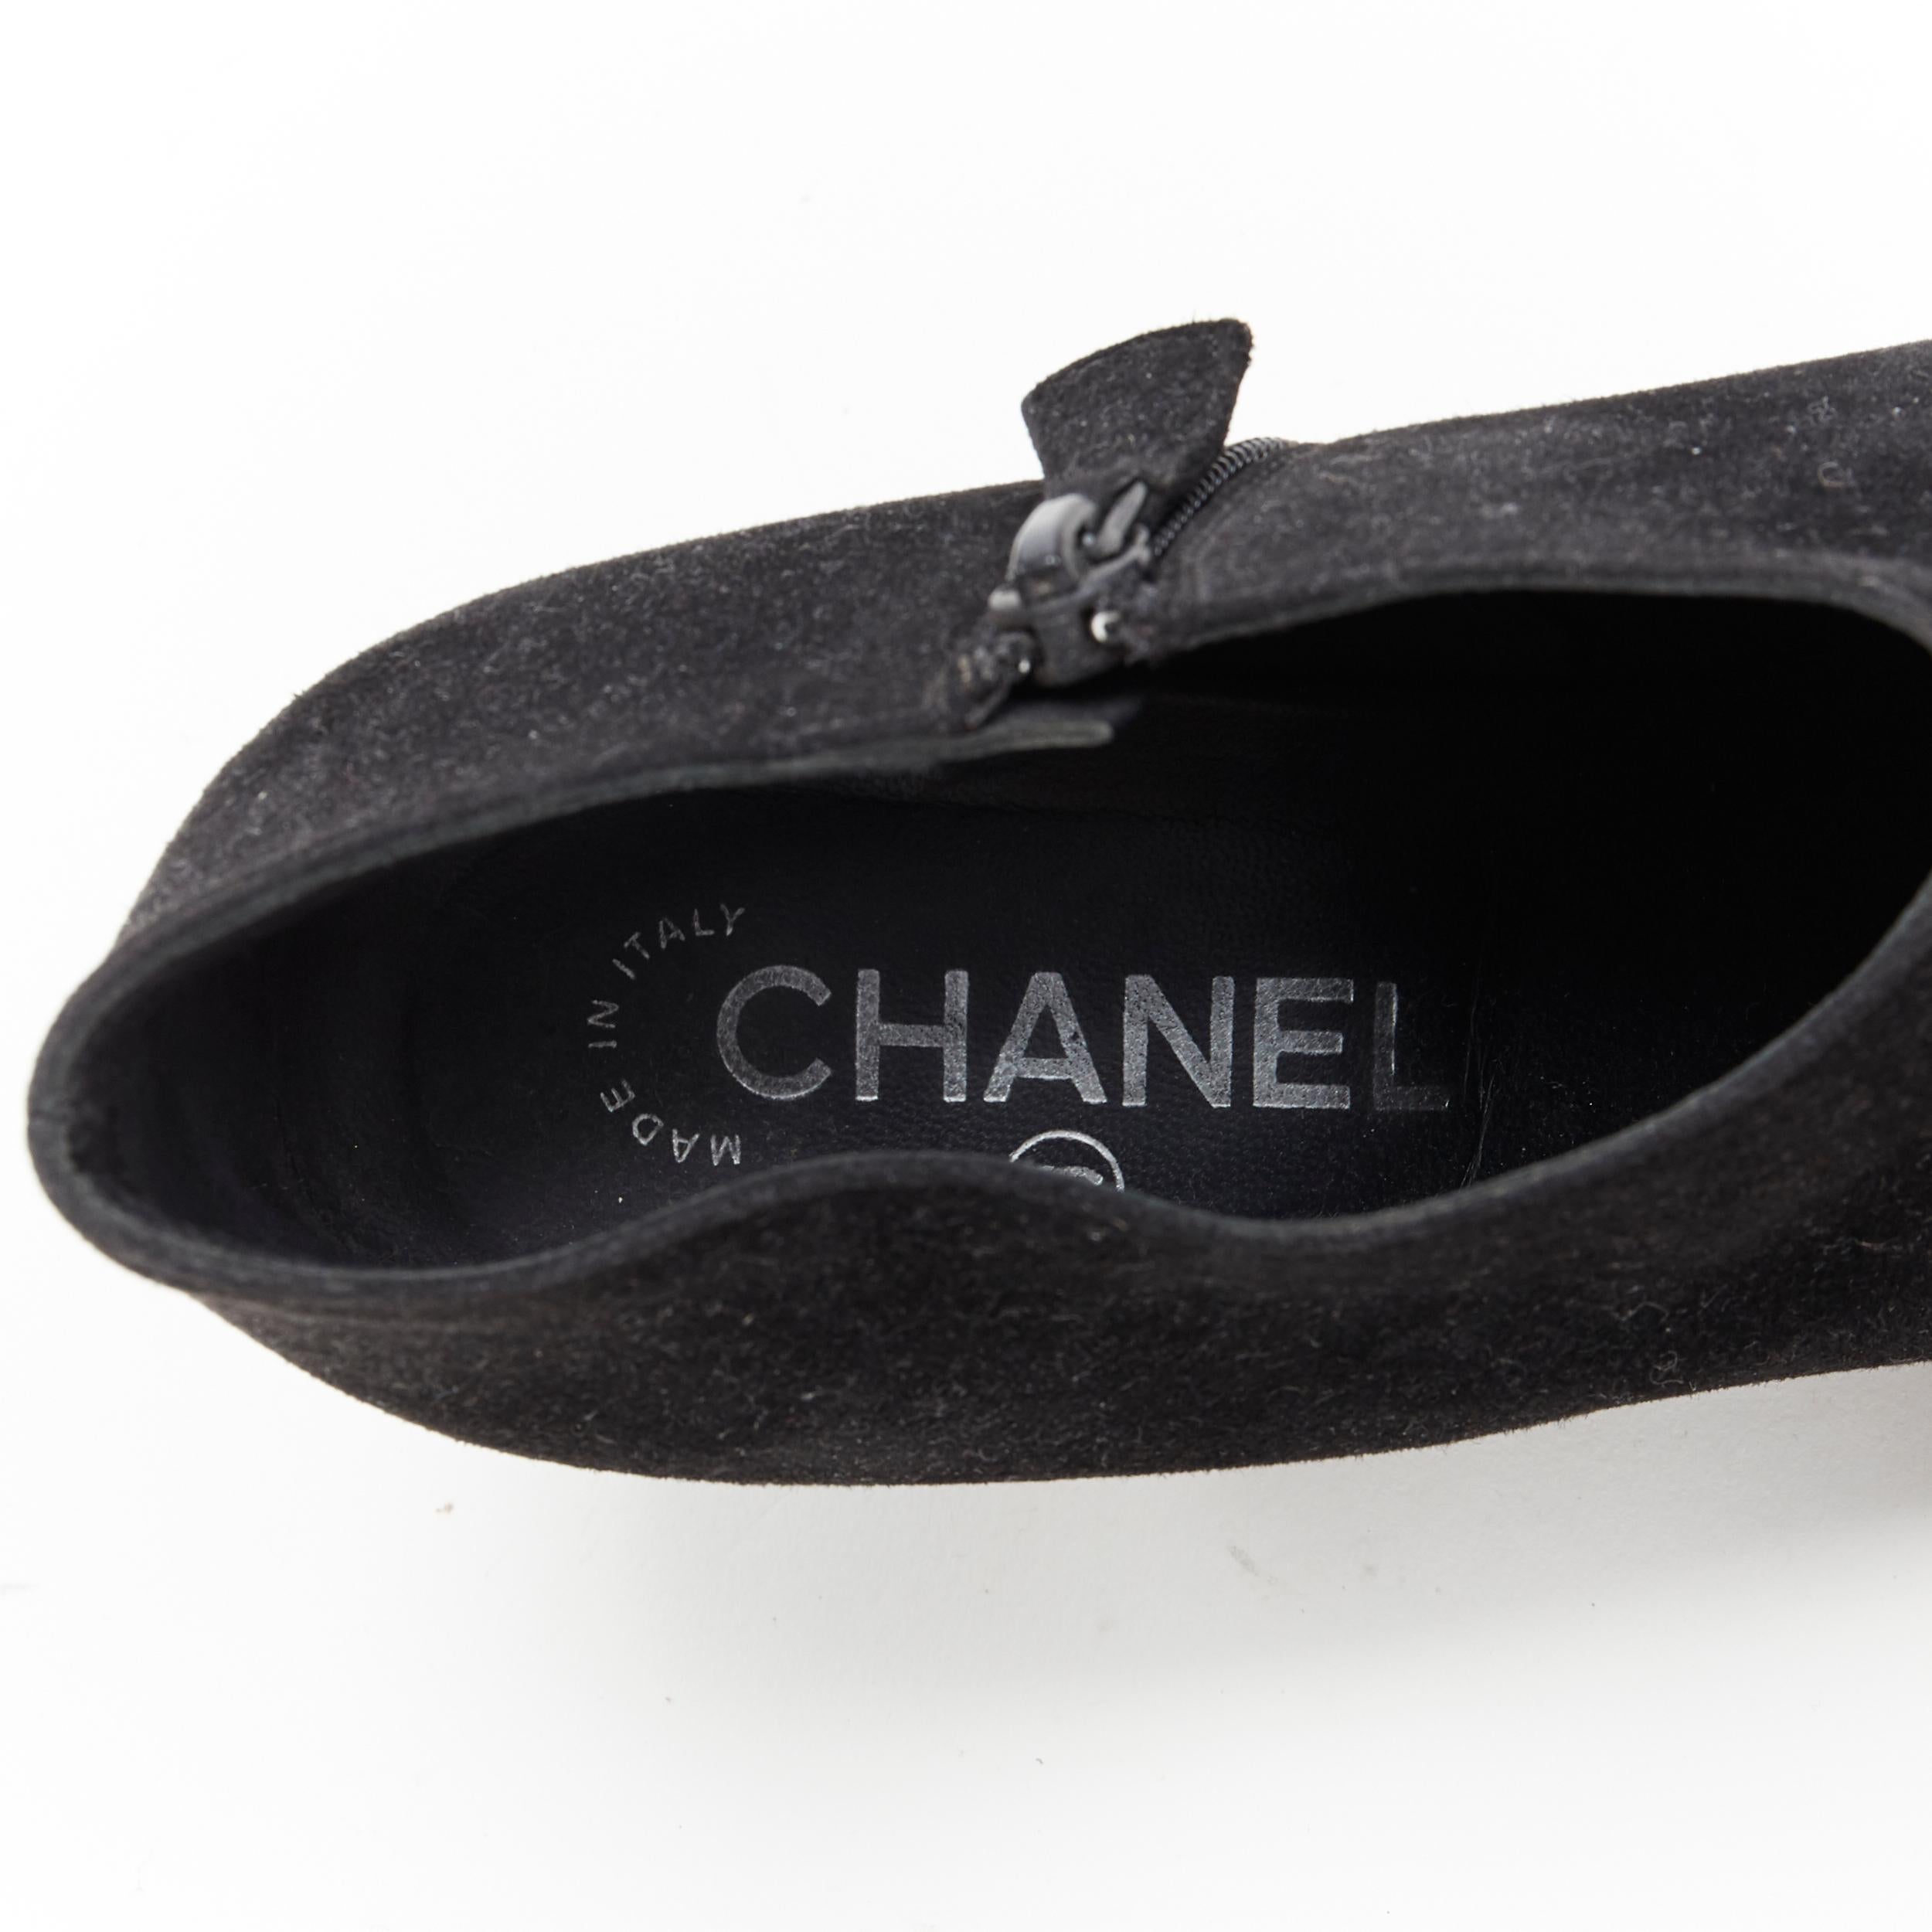 CHANEL black suede silver CC metal toe cap high heel ankle bootie EU37.5 6